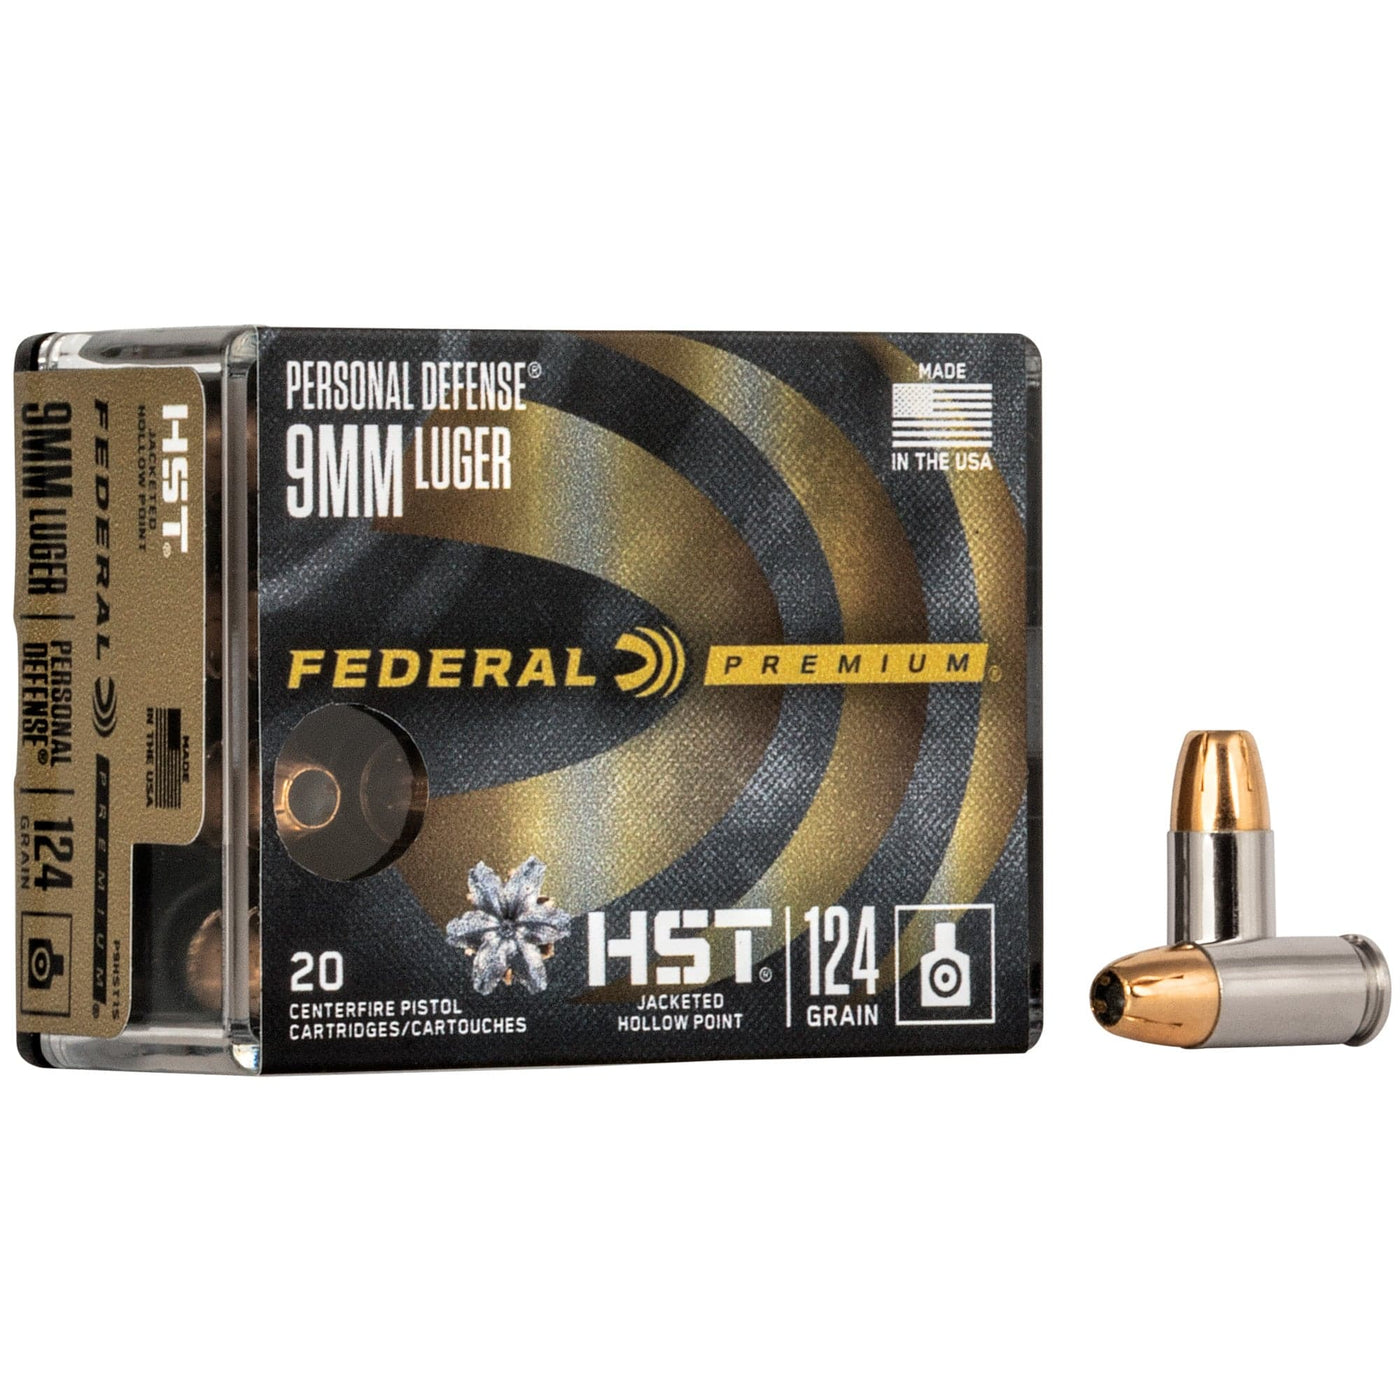 Federal Fed Prm Hst 9mm 124gr Jhp 20/200 Ammunition